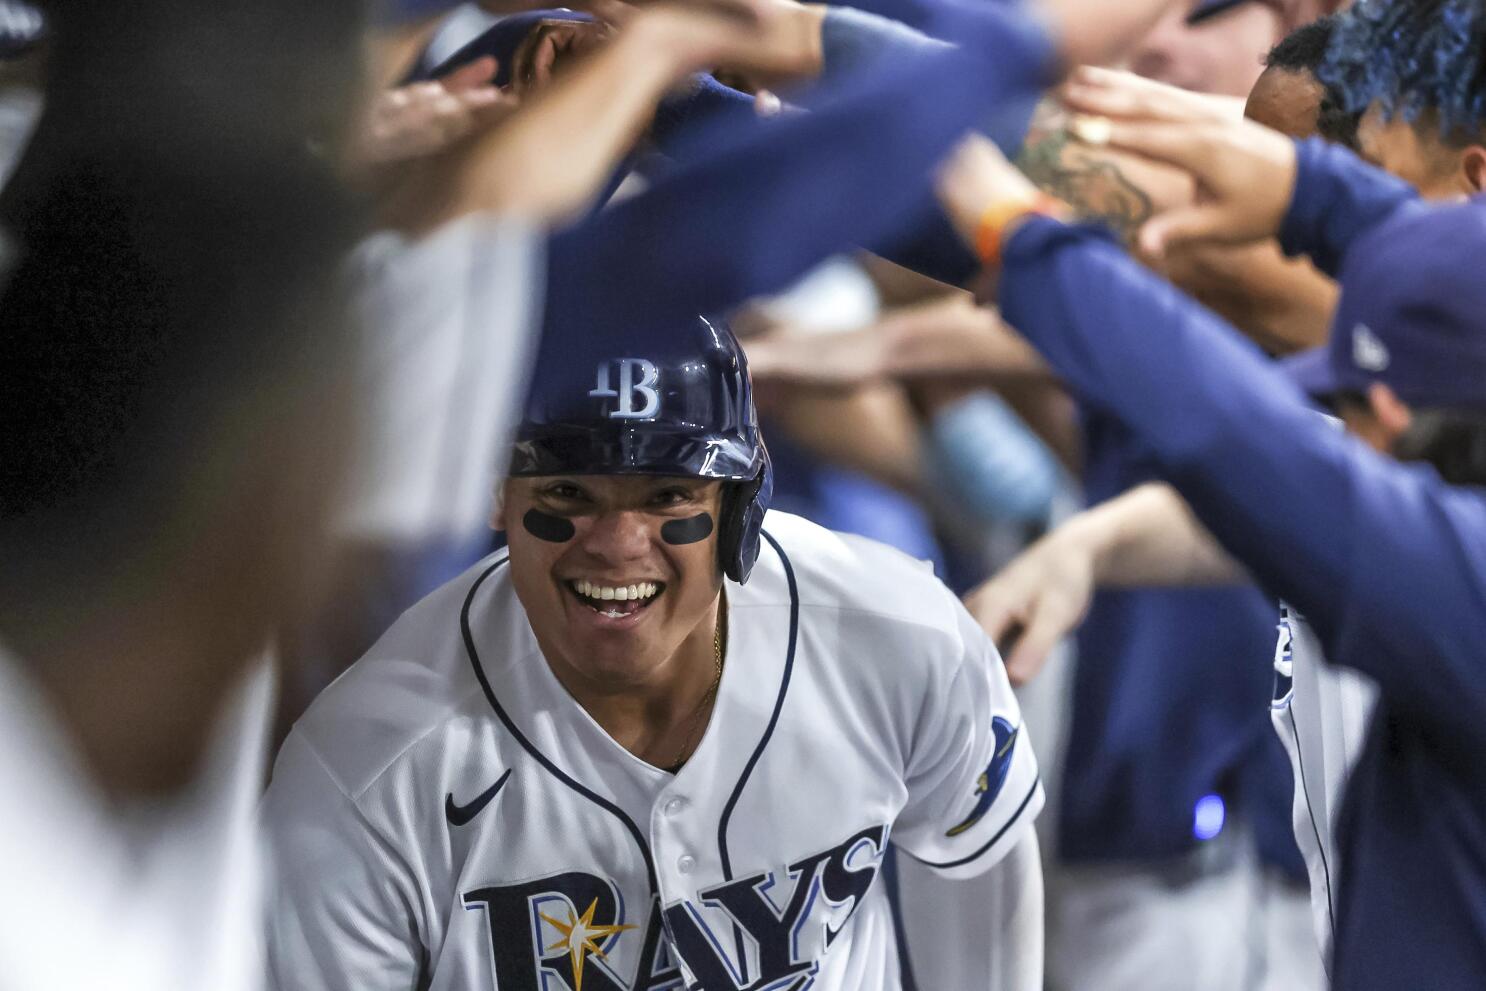 Randy and the Rays: Tampa Bay is lighting up Major League Baseball